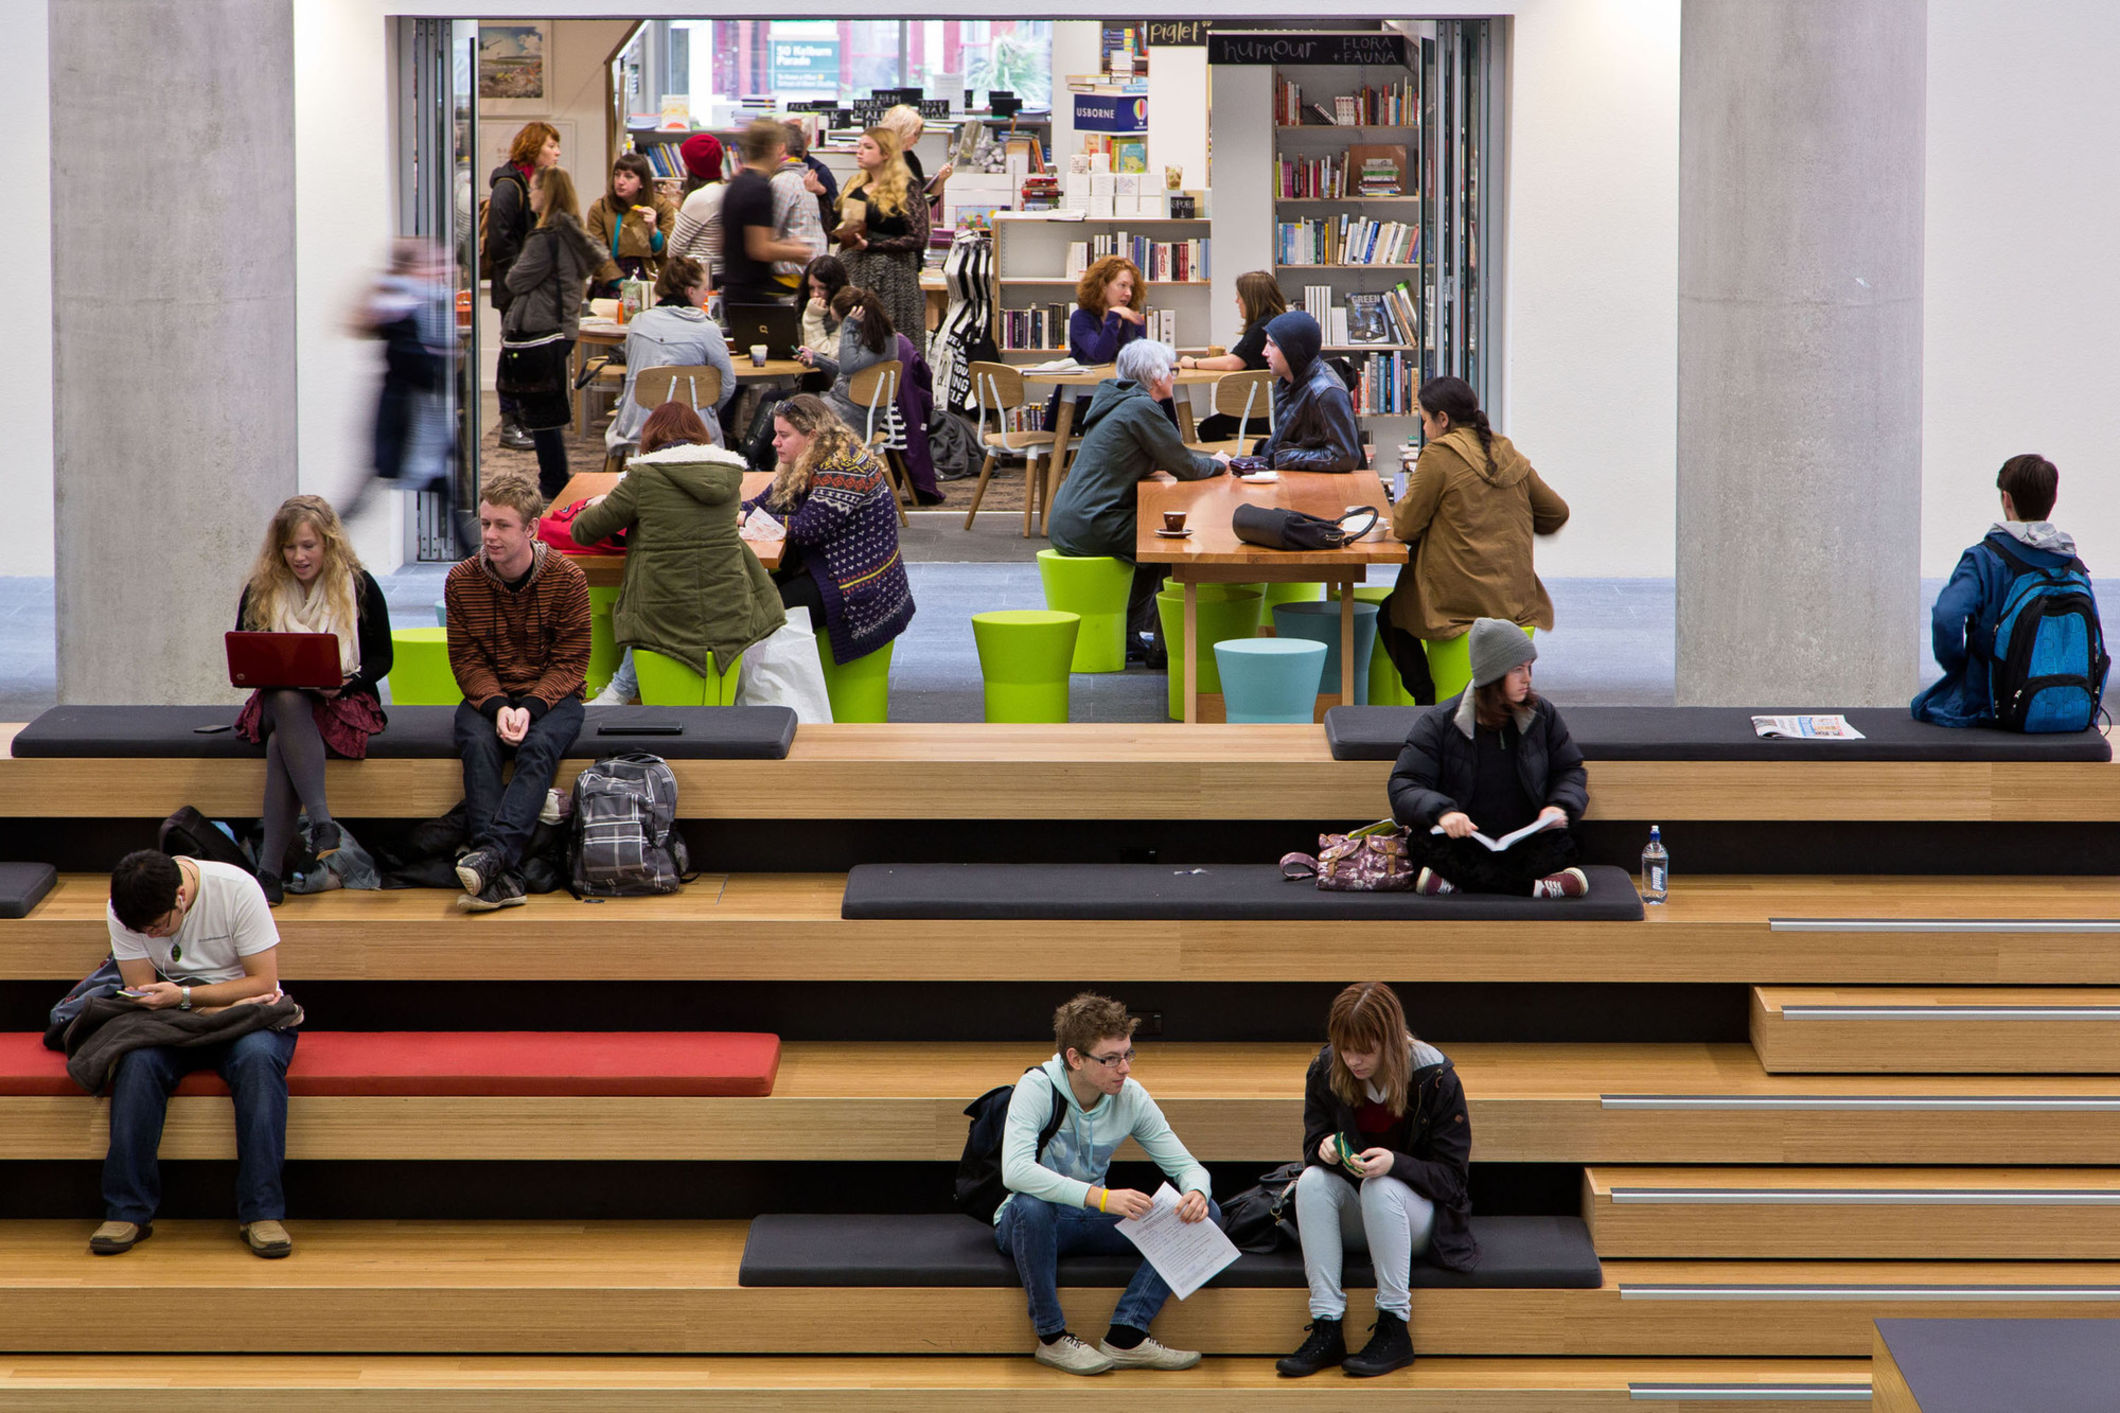 VUW
Campus Hub & Library